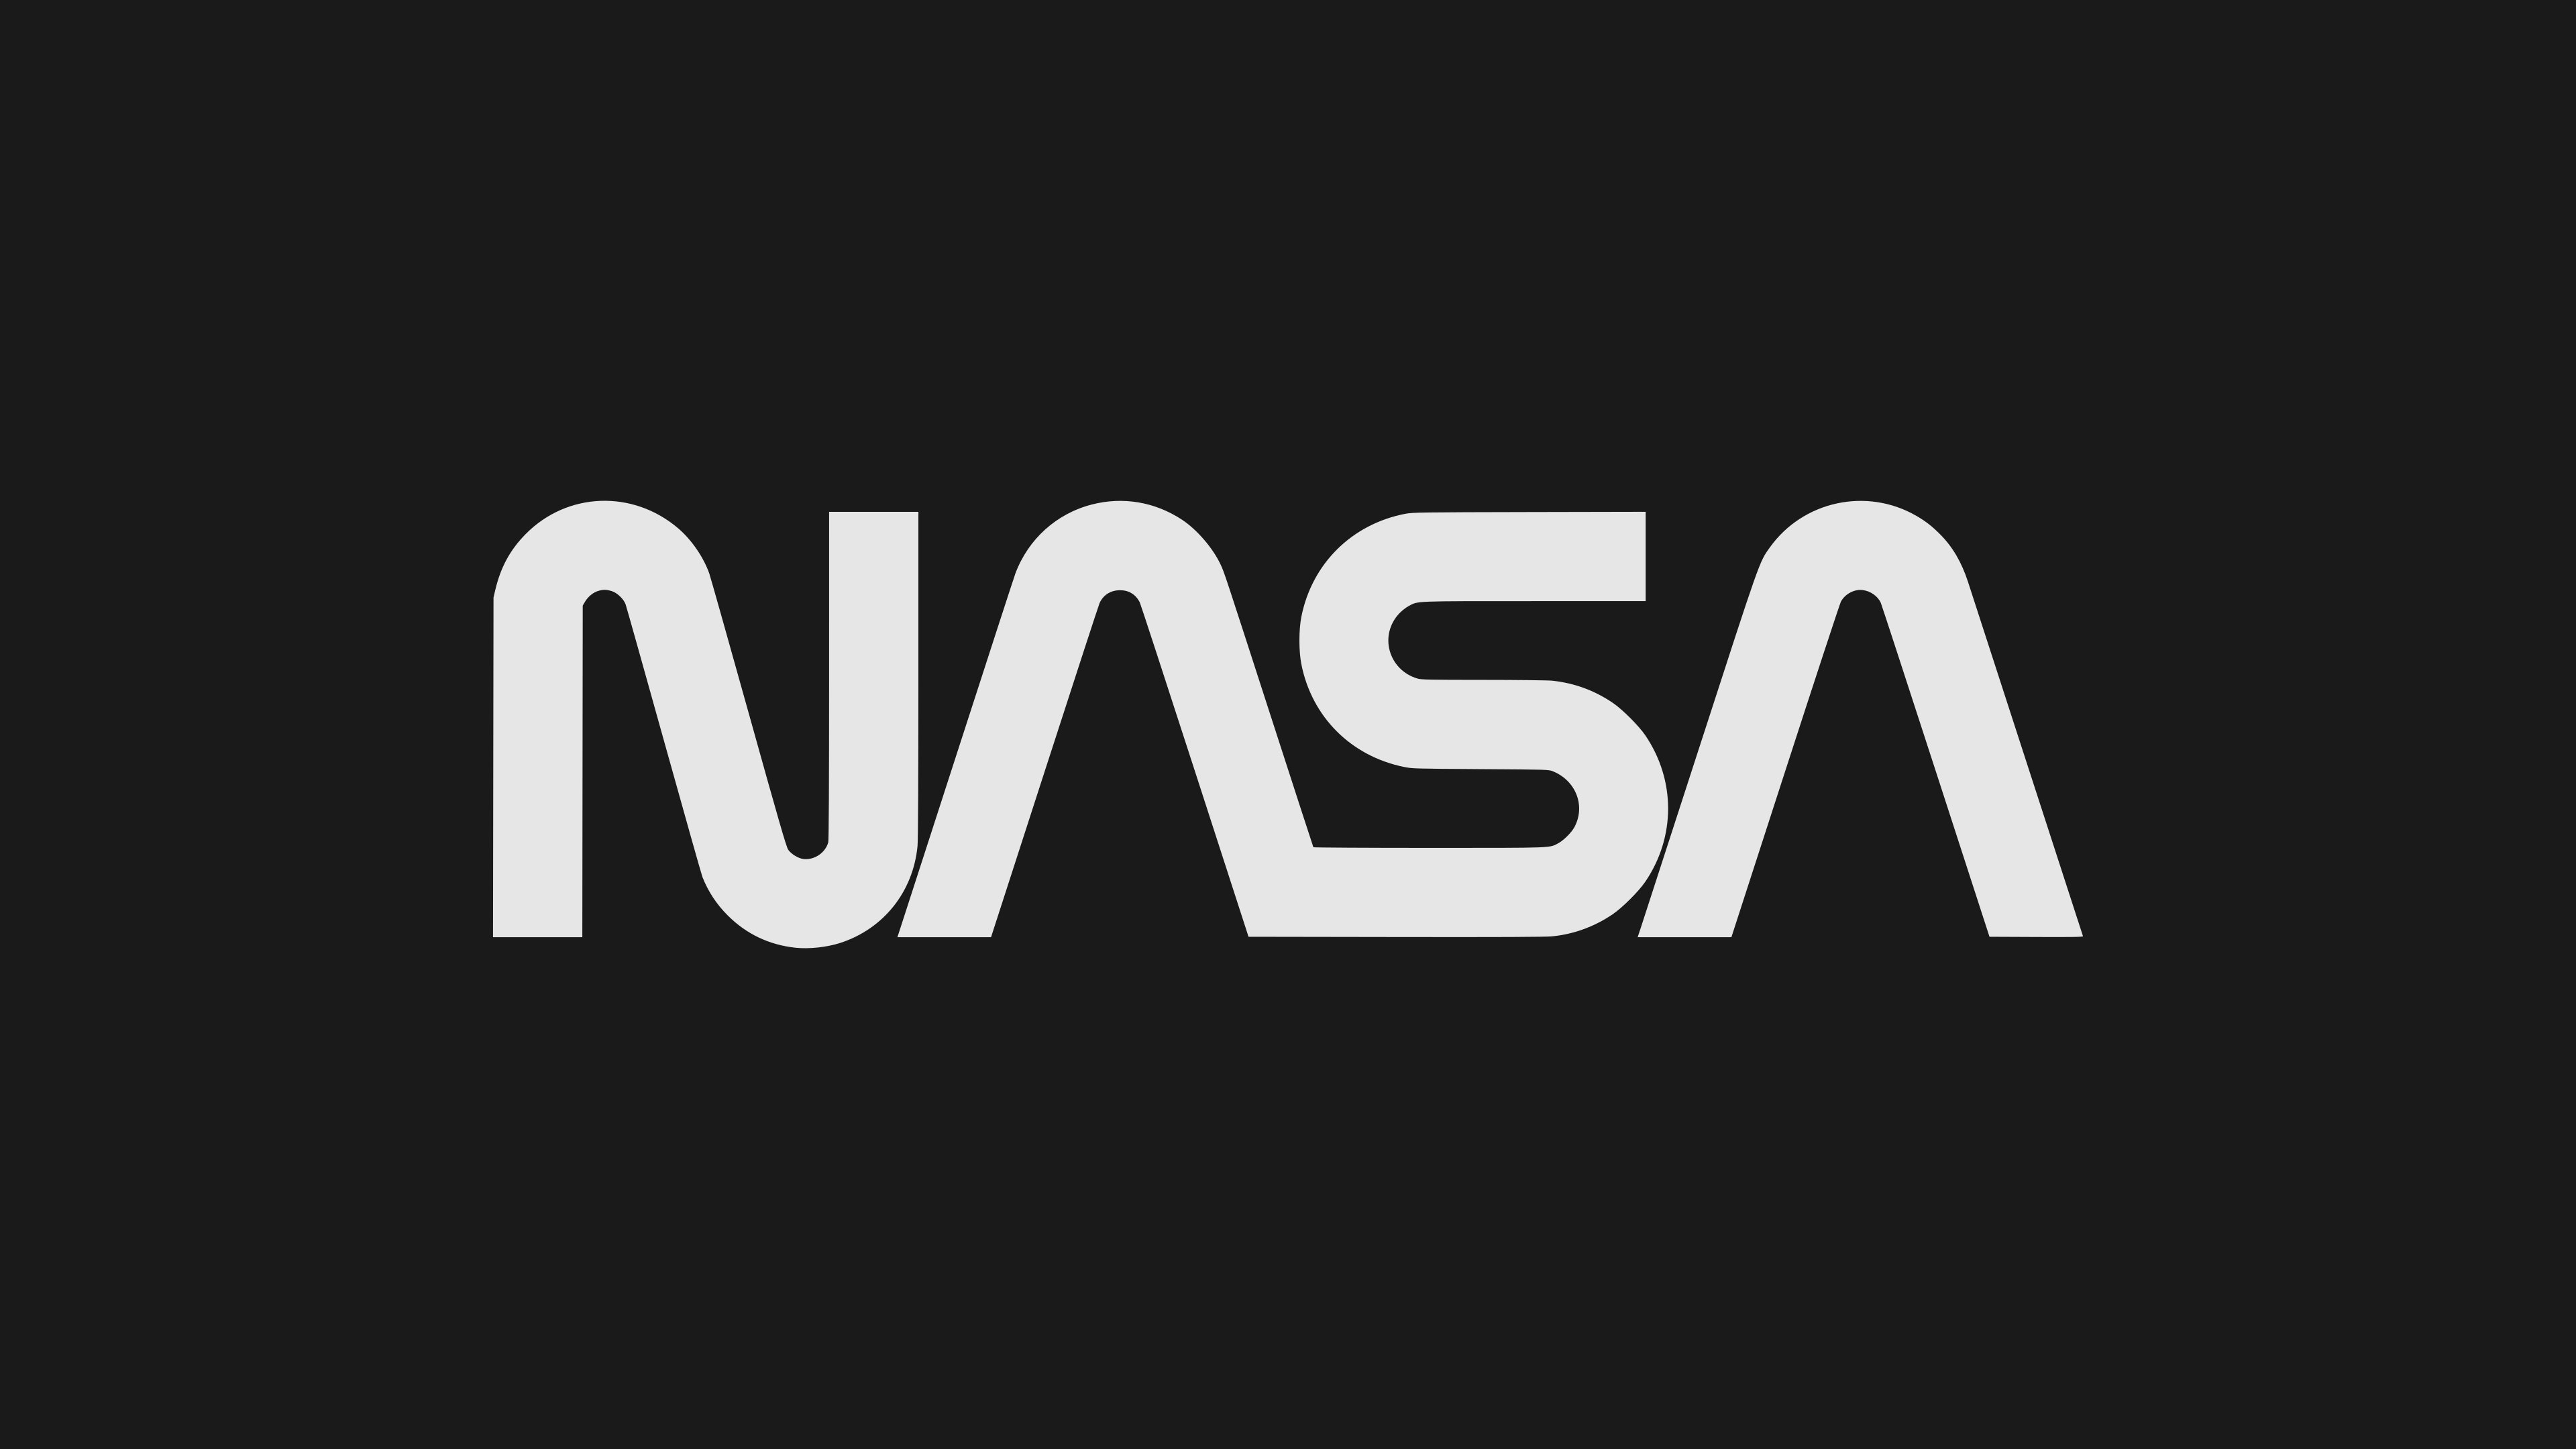 Simply NASA 4K wallpaper